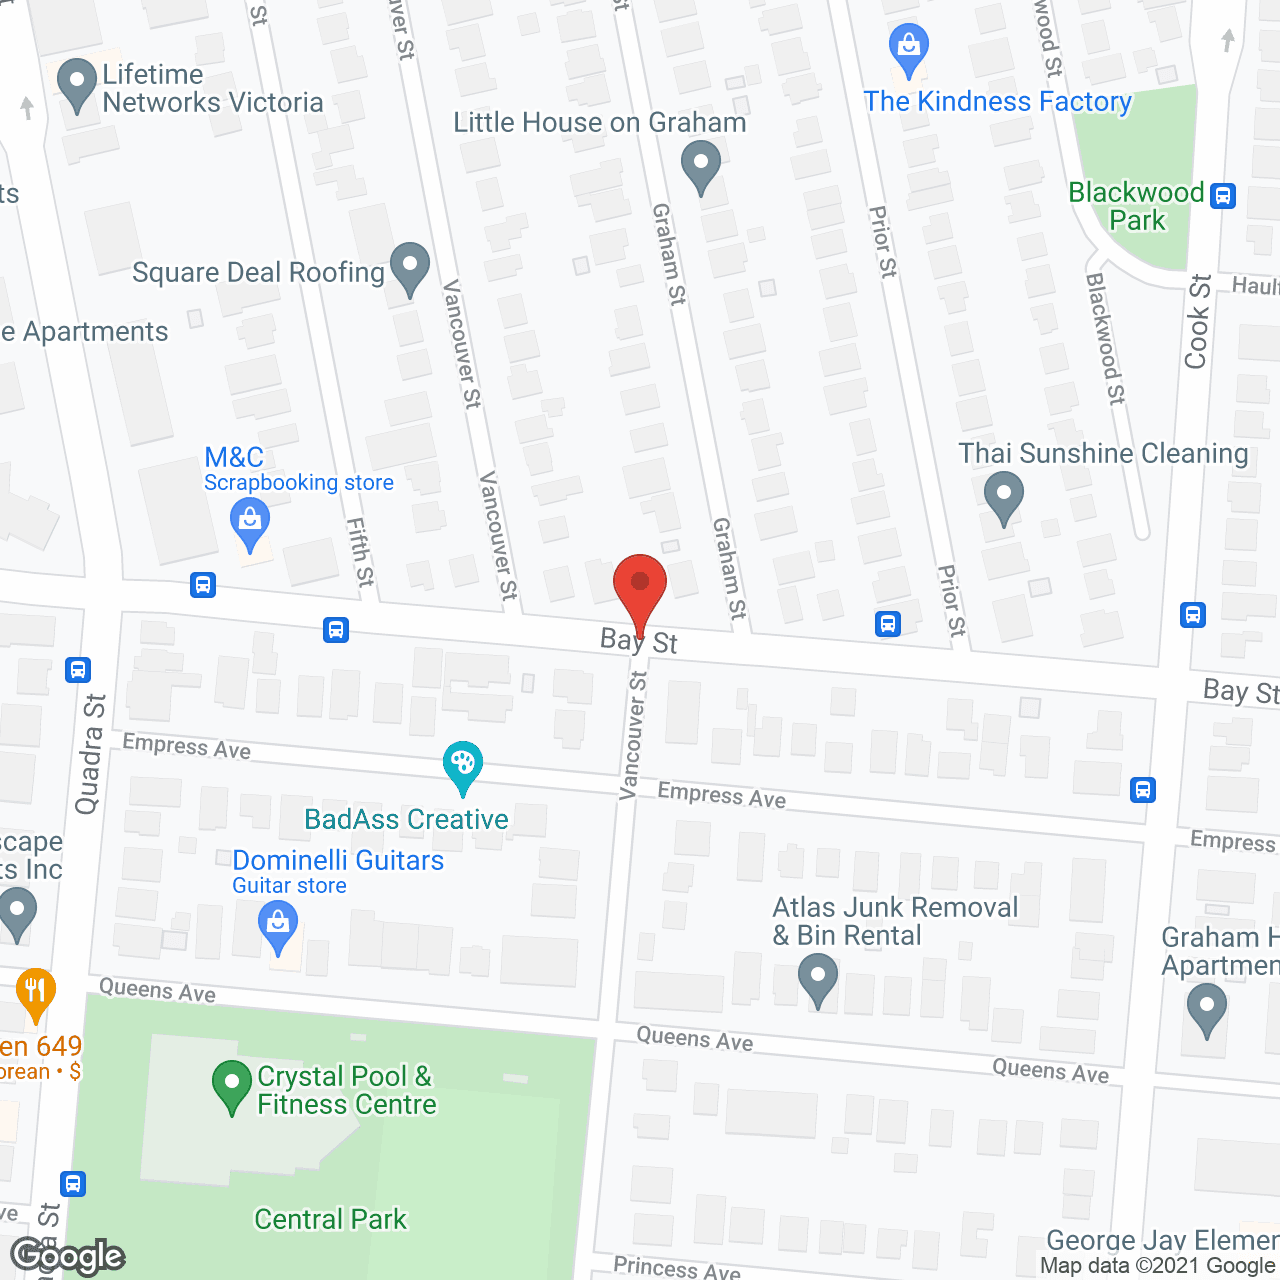 Memorial Pavillion/Victoria Hospice in google map